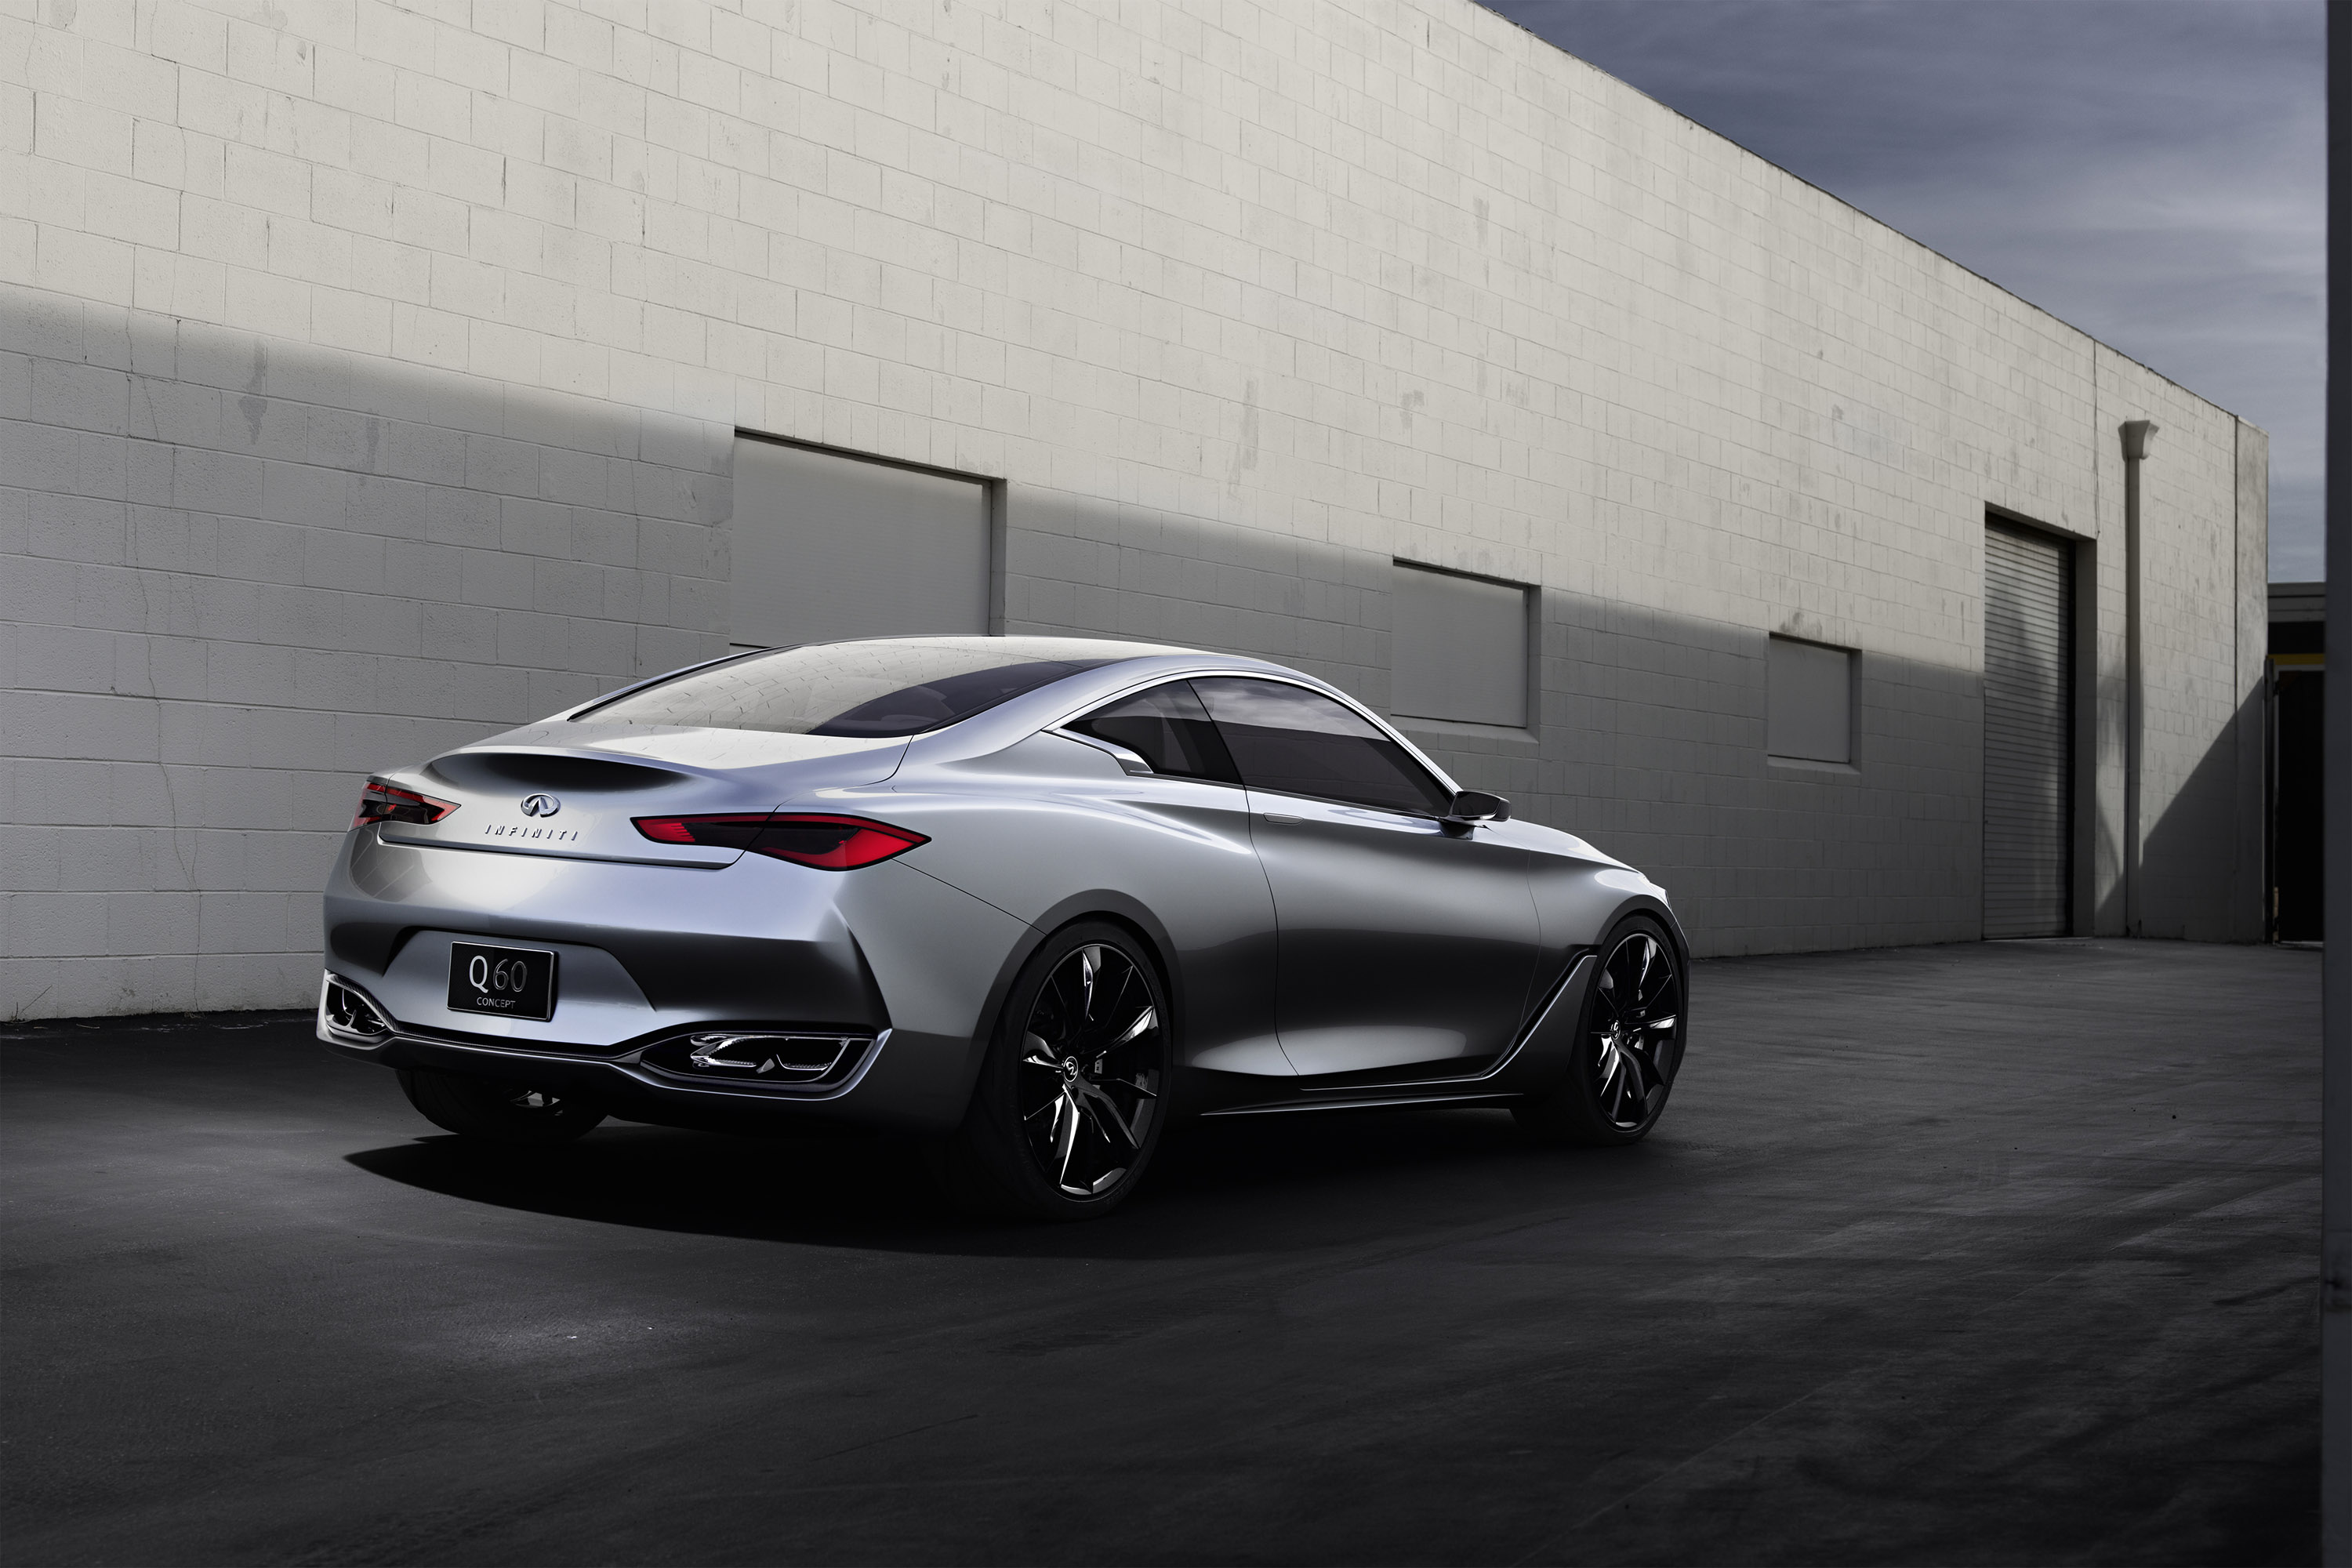 2015 Infiniti Q60 Concept - HD Pictures @ carsinvasion.com